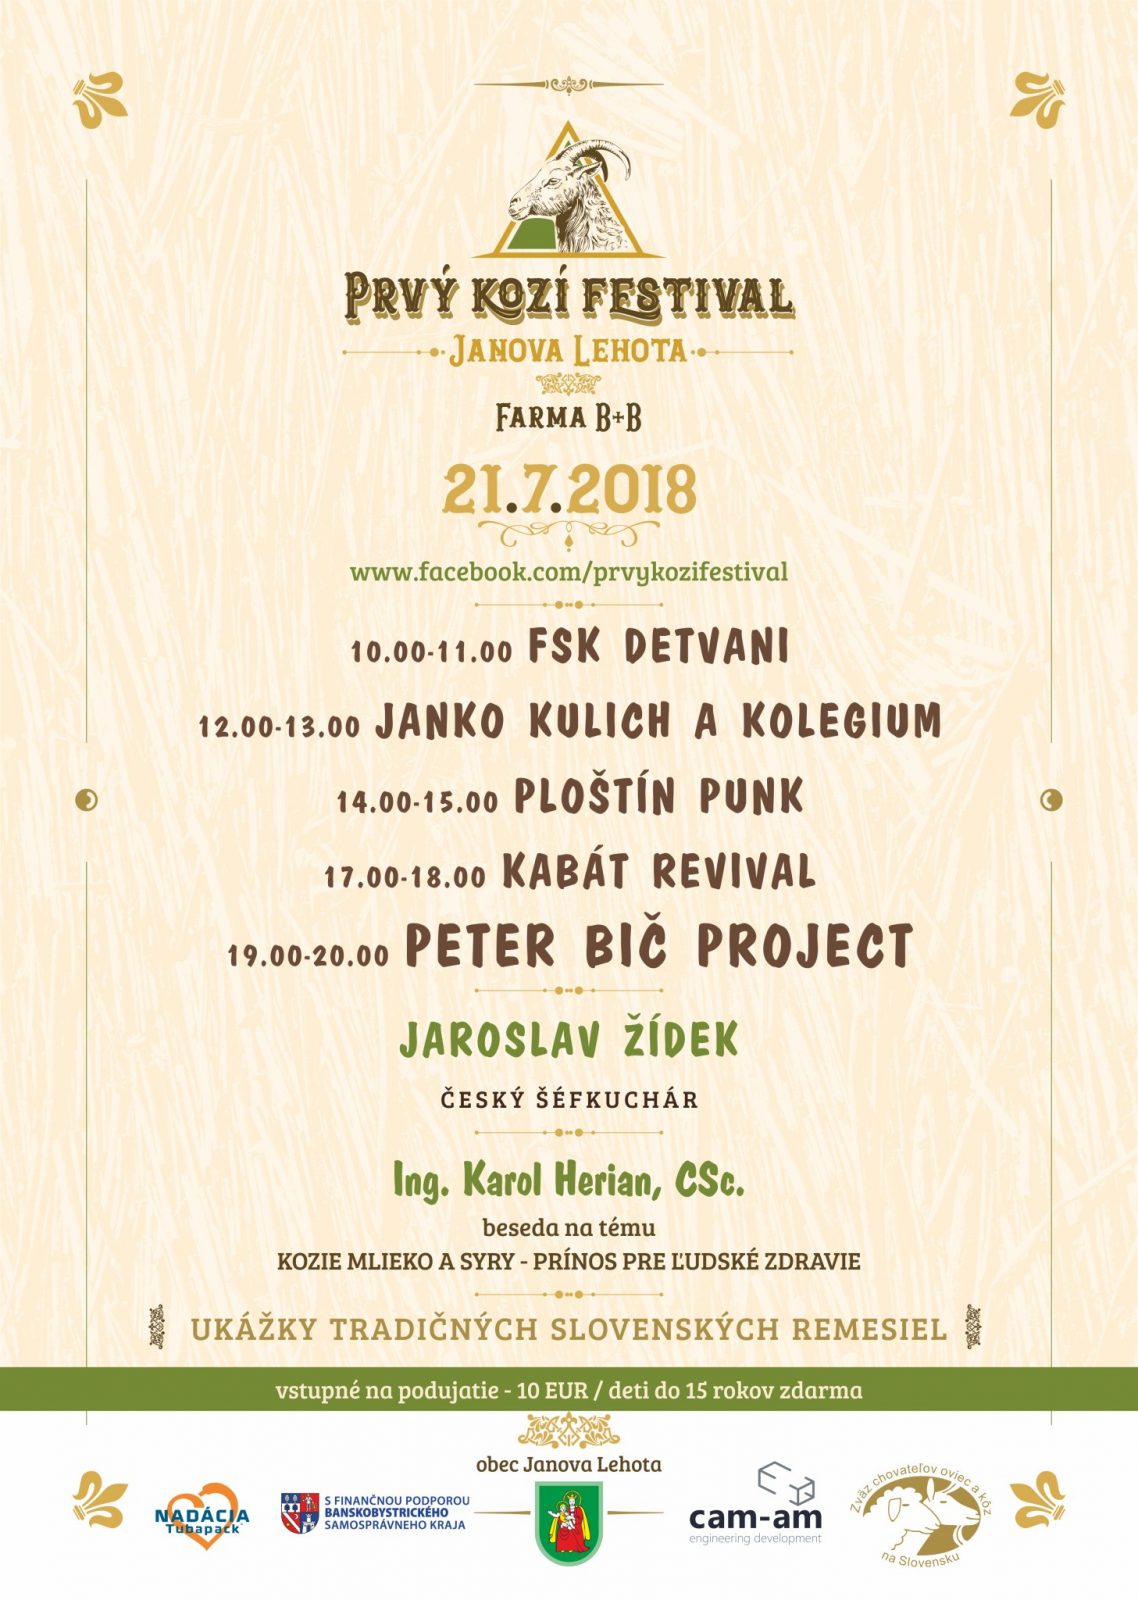 Prv koz festival Janova Lehota 2018